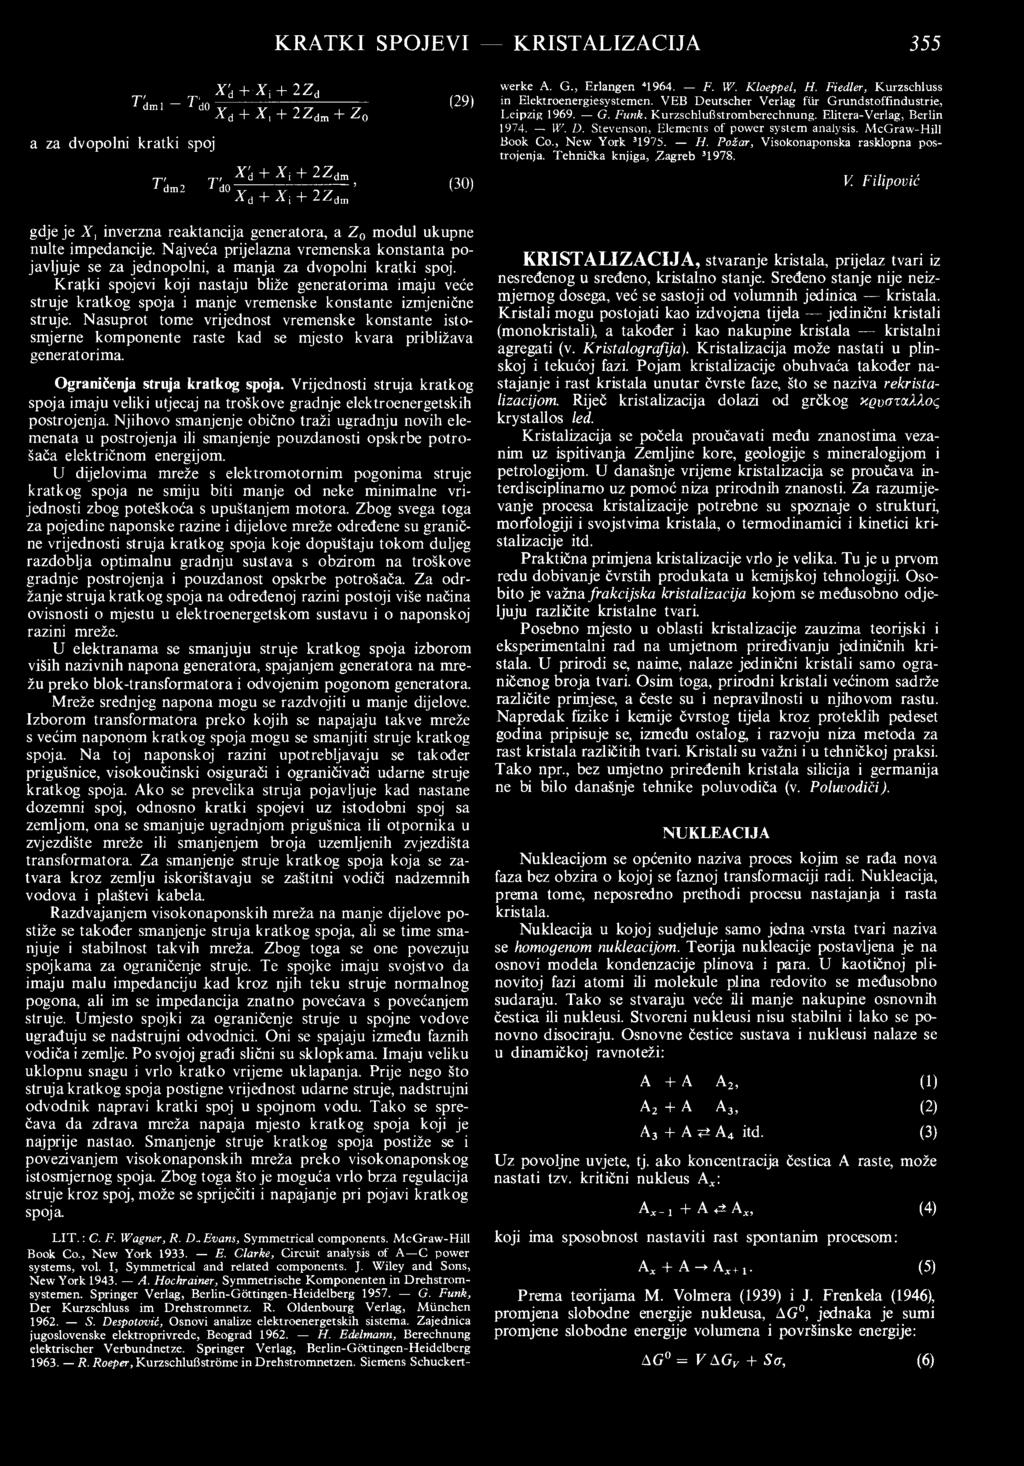 Springer Verlag, Berlin-Göttingen-Heidelberg 957. G. Funk, Der Kurzschluss im Drehstrmnetz. R. Oldenburg Verlag, München 962. S. Desptvić, Osnvi analize elektrenergetskih sistema.